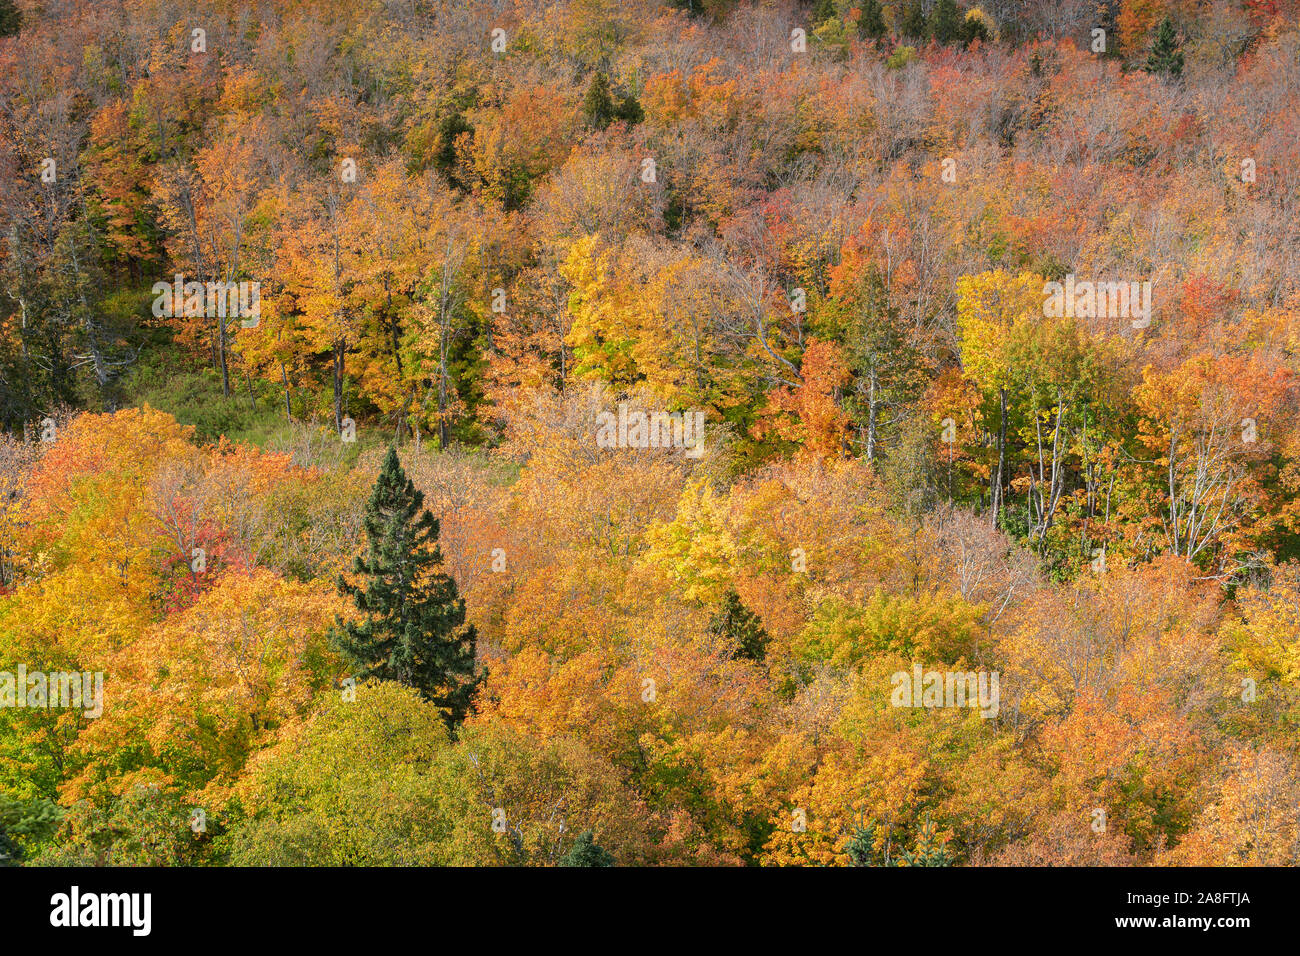 In den herbstlichen Laubwald gemischt, Herbst, Mystery Lookout, Minnesota, von Dominique Braud/Dembinsky Foto Assoc Stockfoto